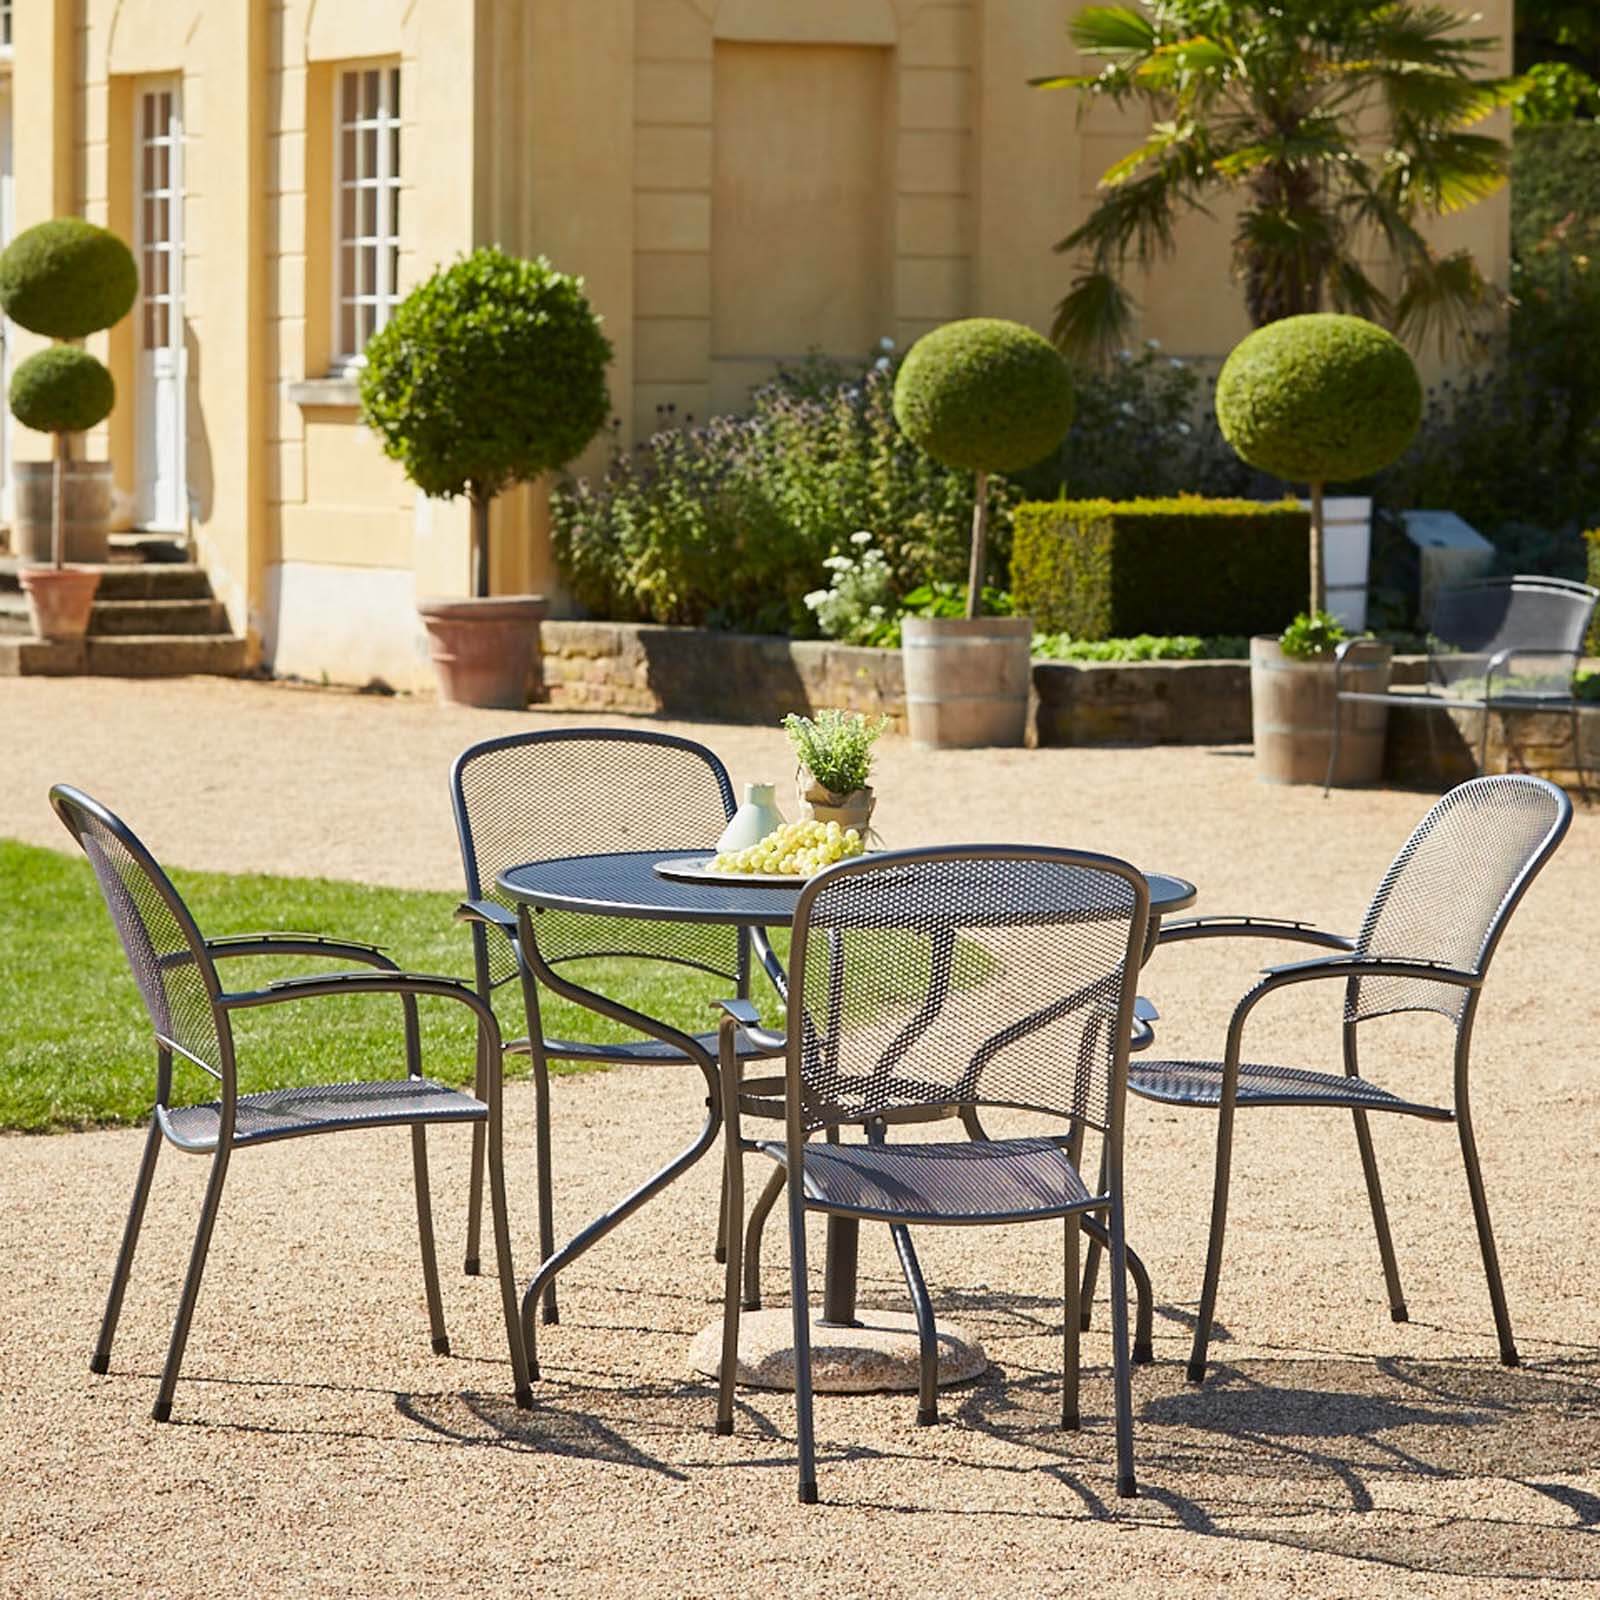 Royal Garden Metal Carlo 4 Seater Round Garden Furniture Set in Grey